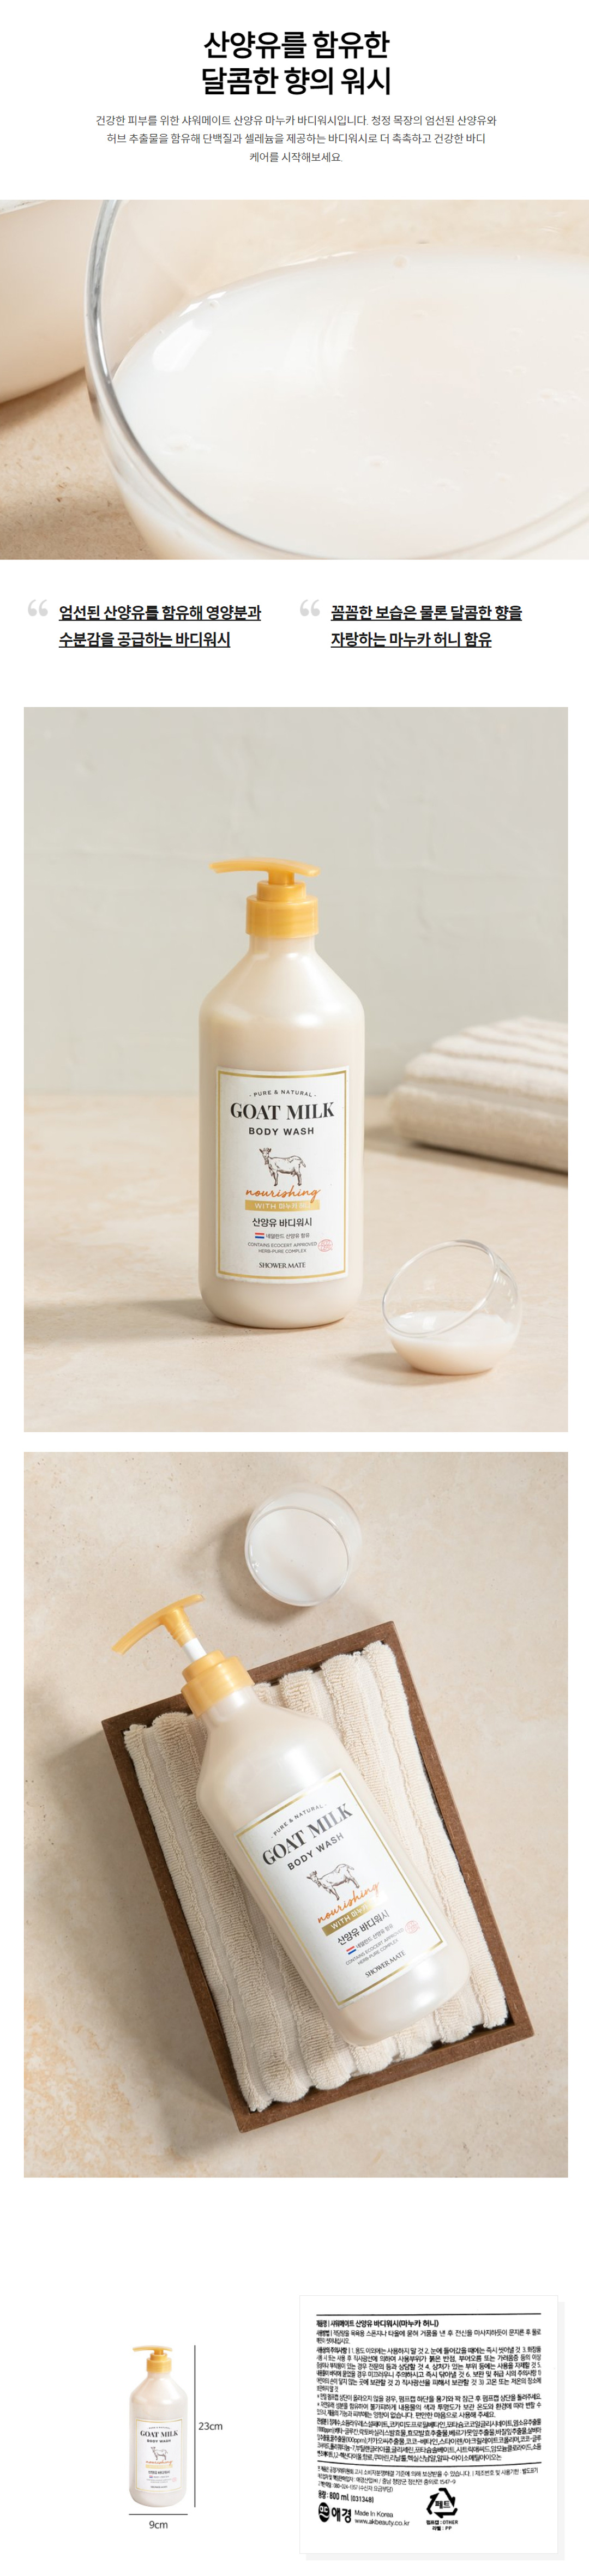 Shower mate Goat Milk Body Wash (with Manuka Honey) ingredients